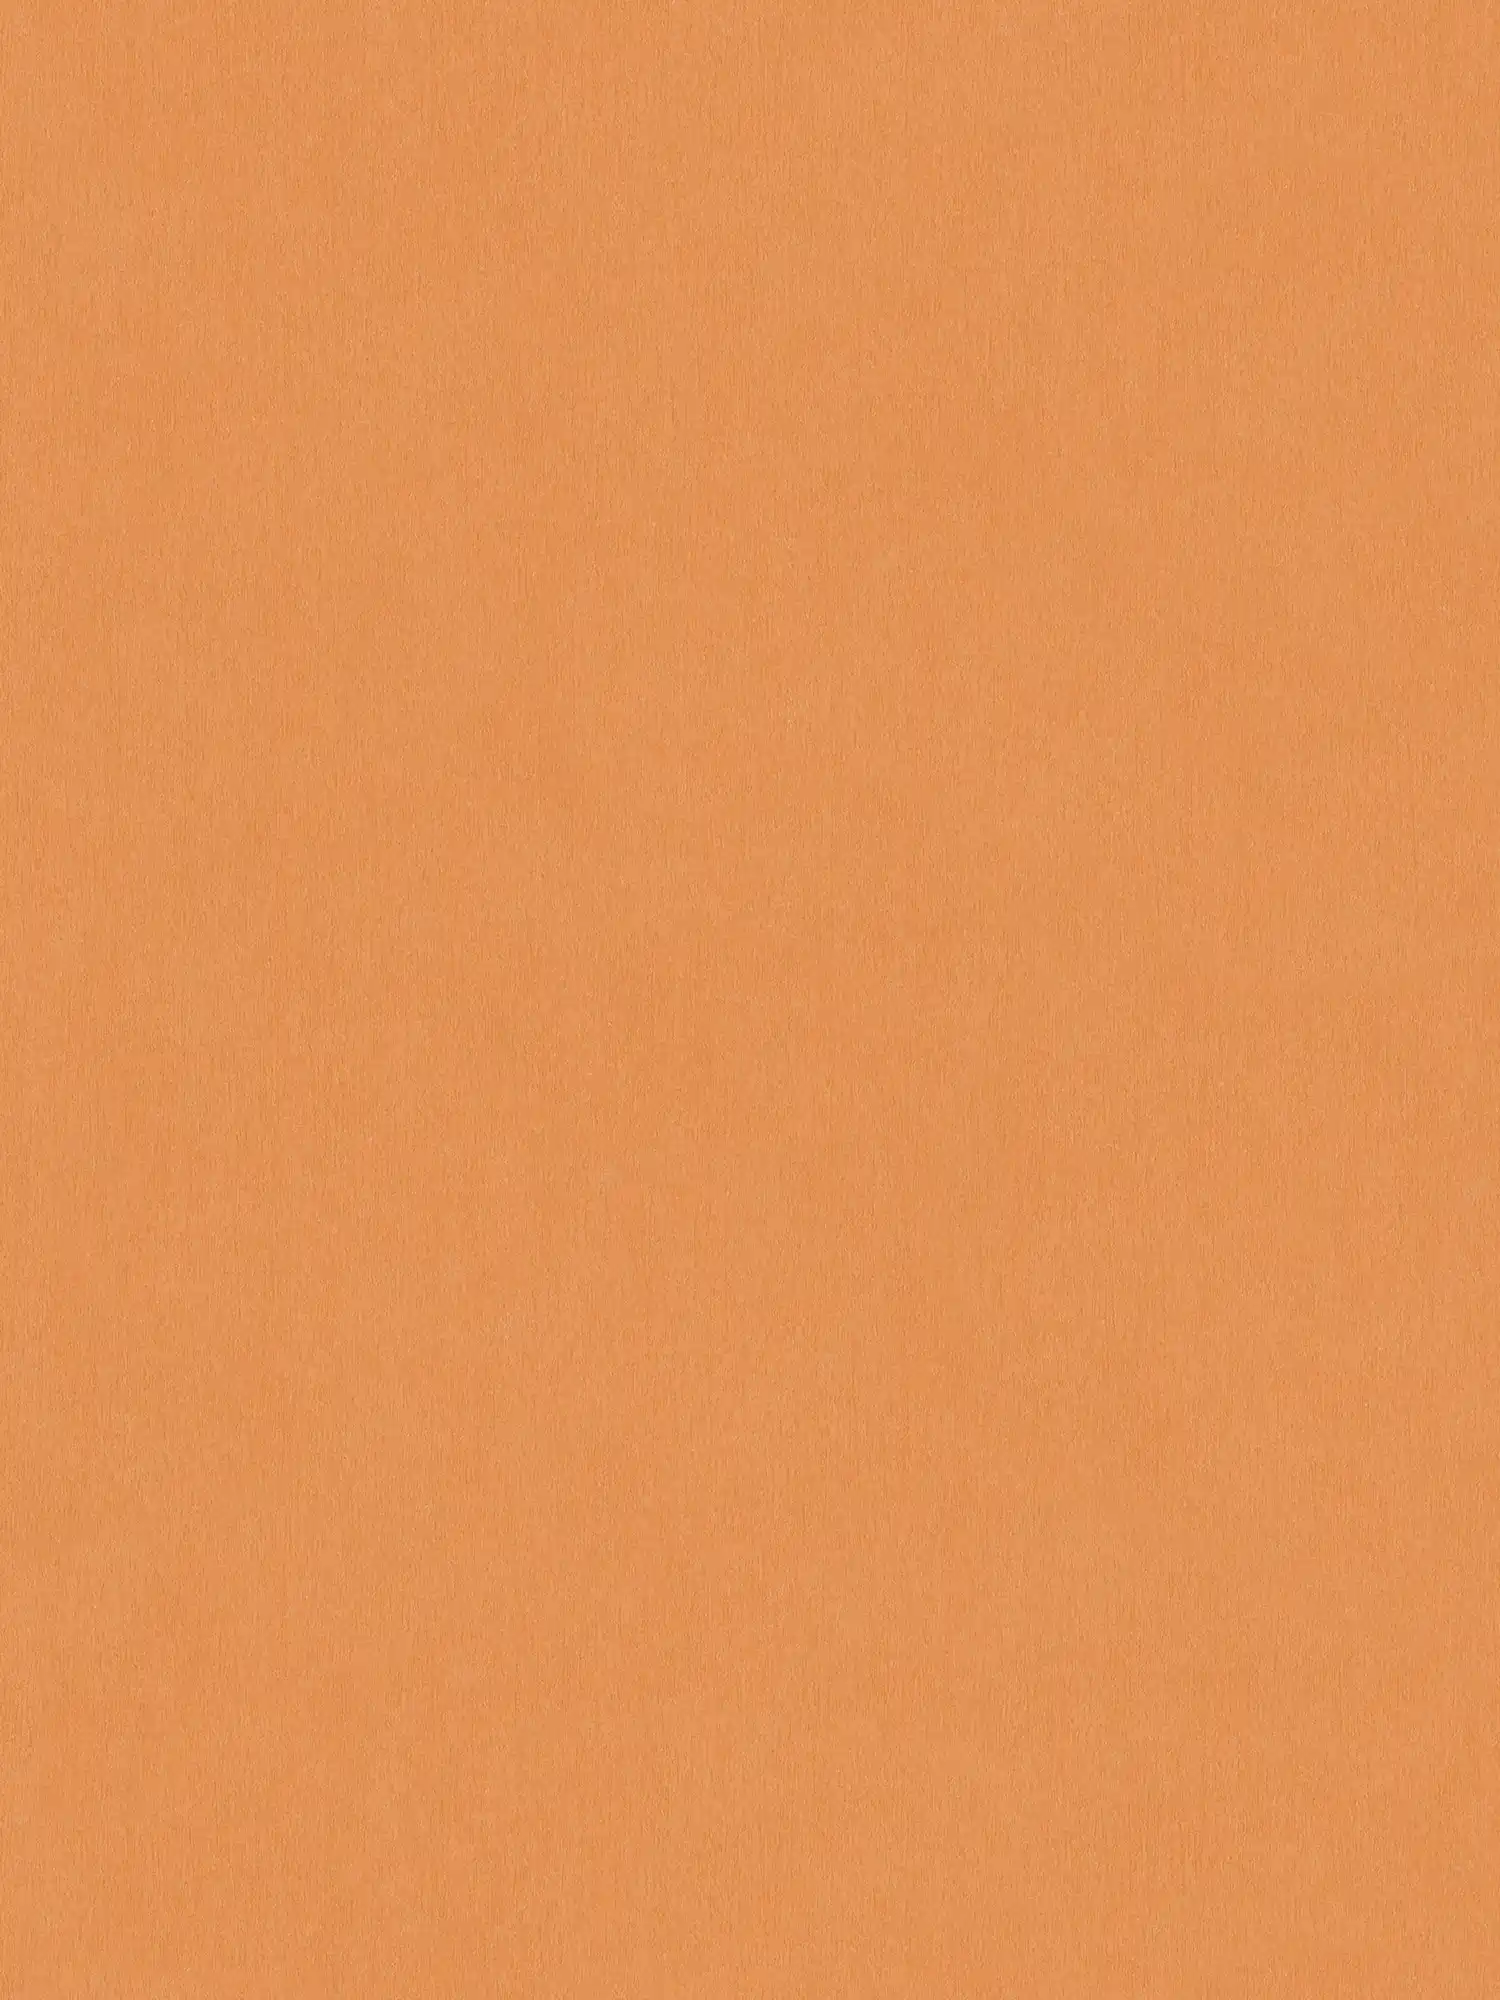 Smooth wallpaper nursery plain - orange
